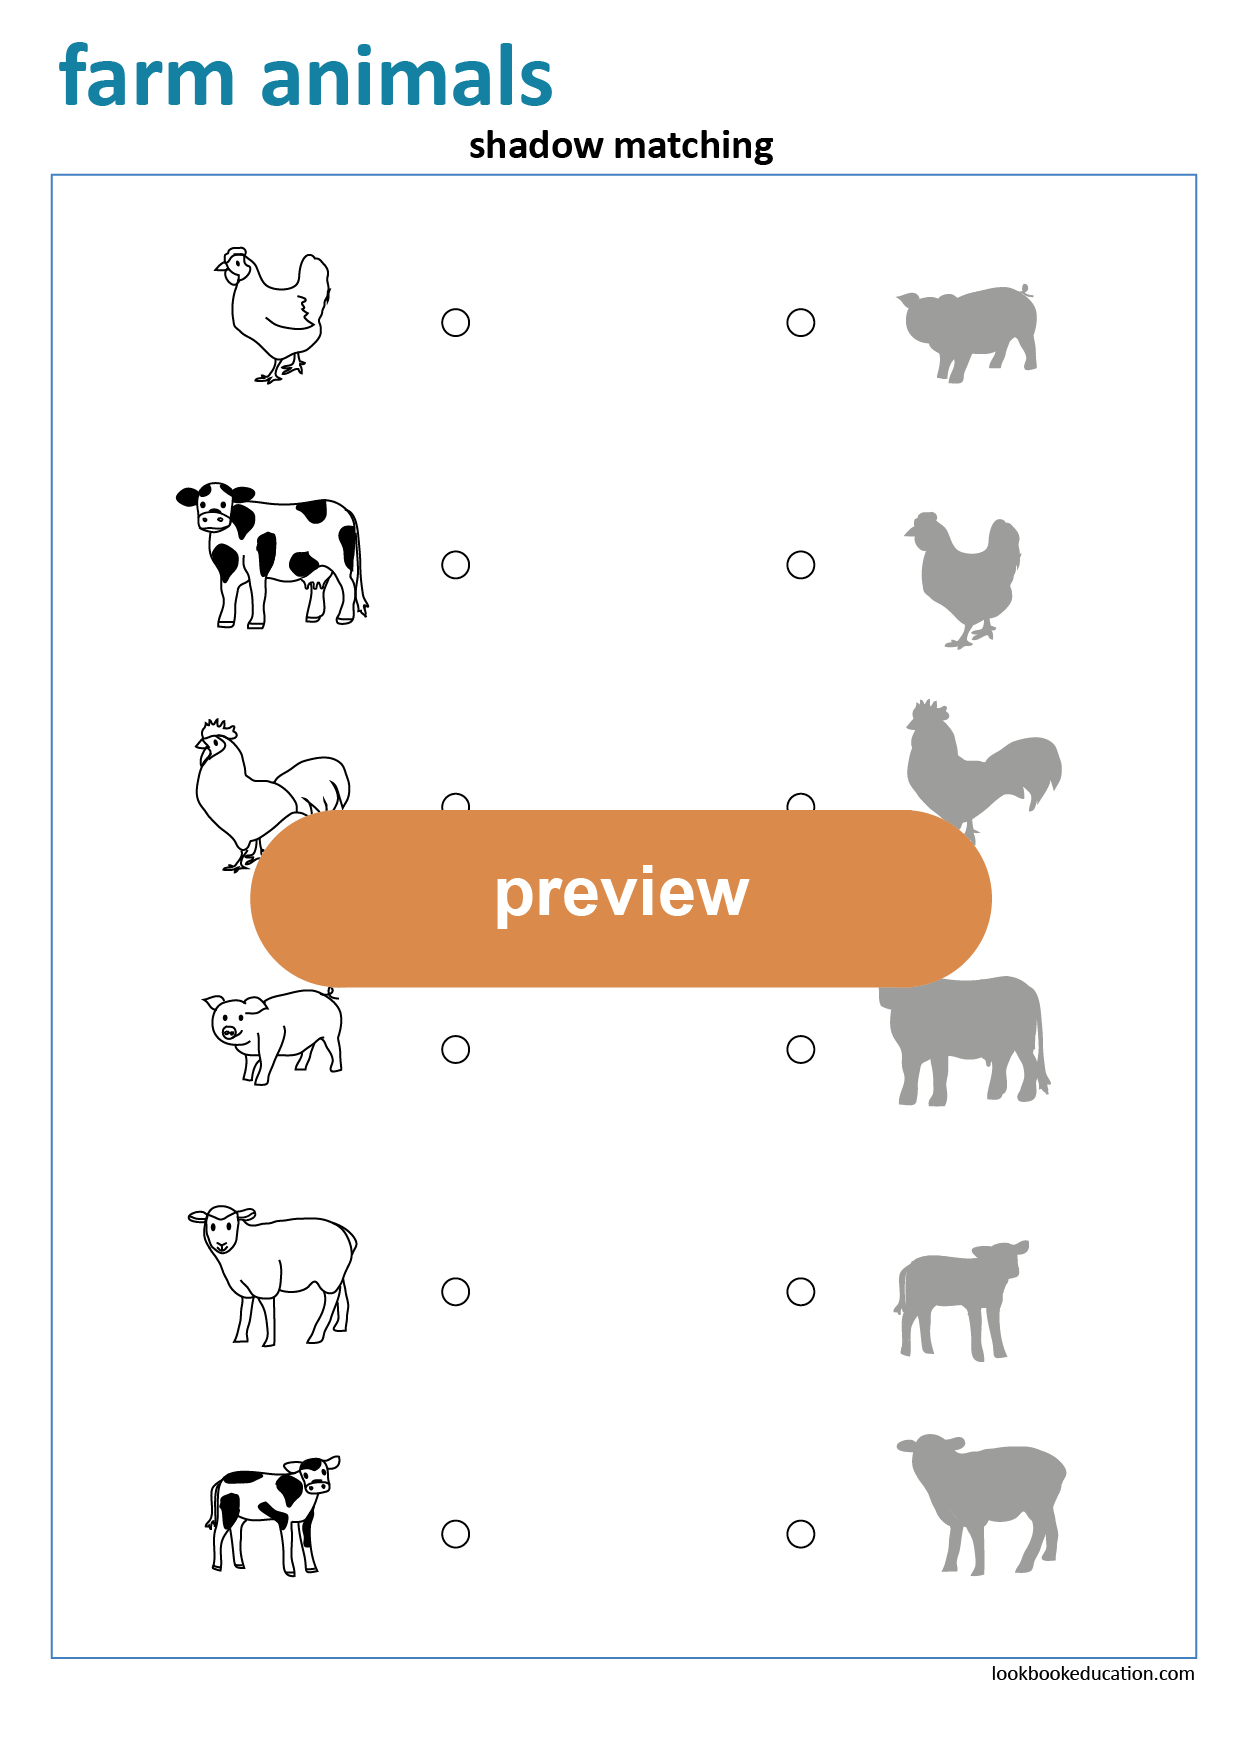 Worksheet Shadow Matching Farm Animals - Lookbook Education